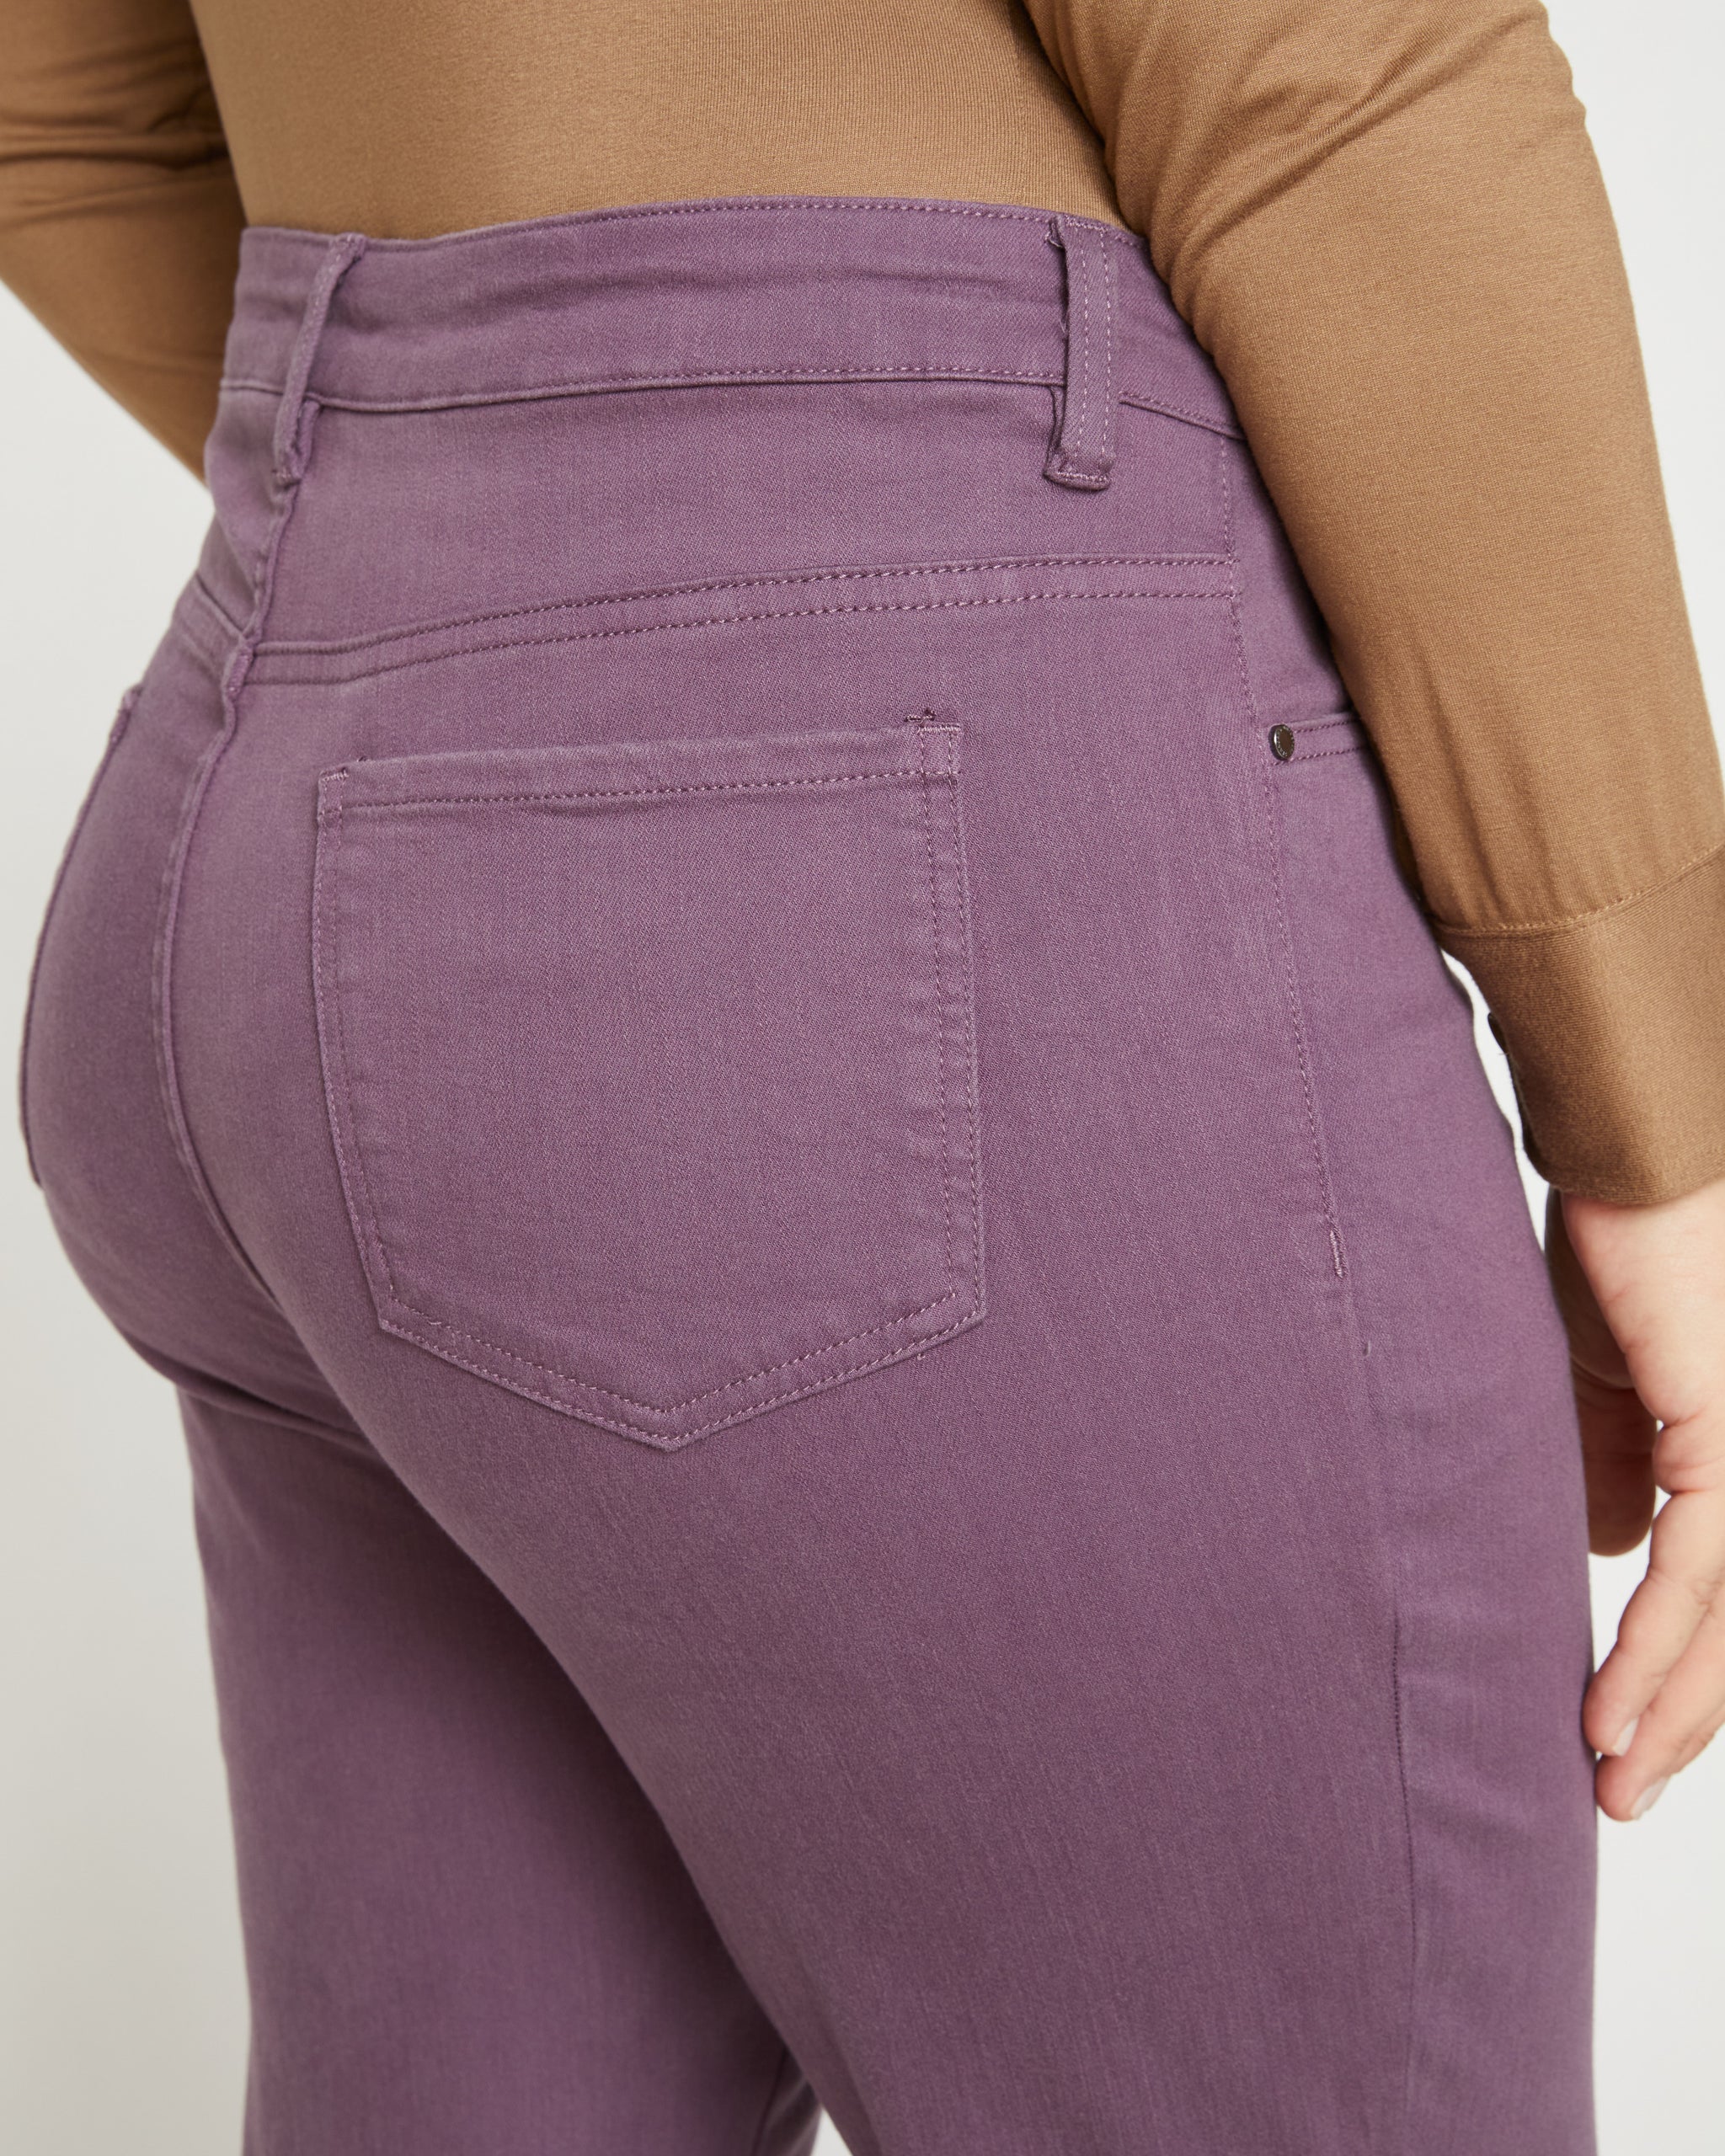 Jeans, Purple Brand Jeans Size 32